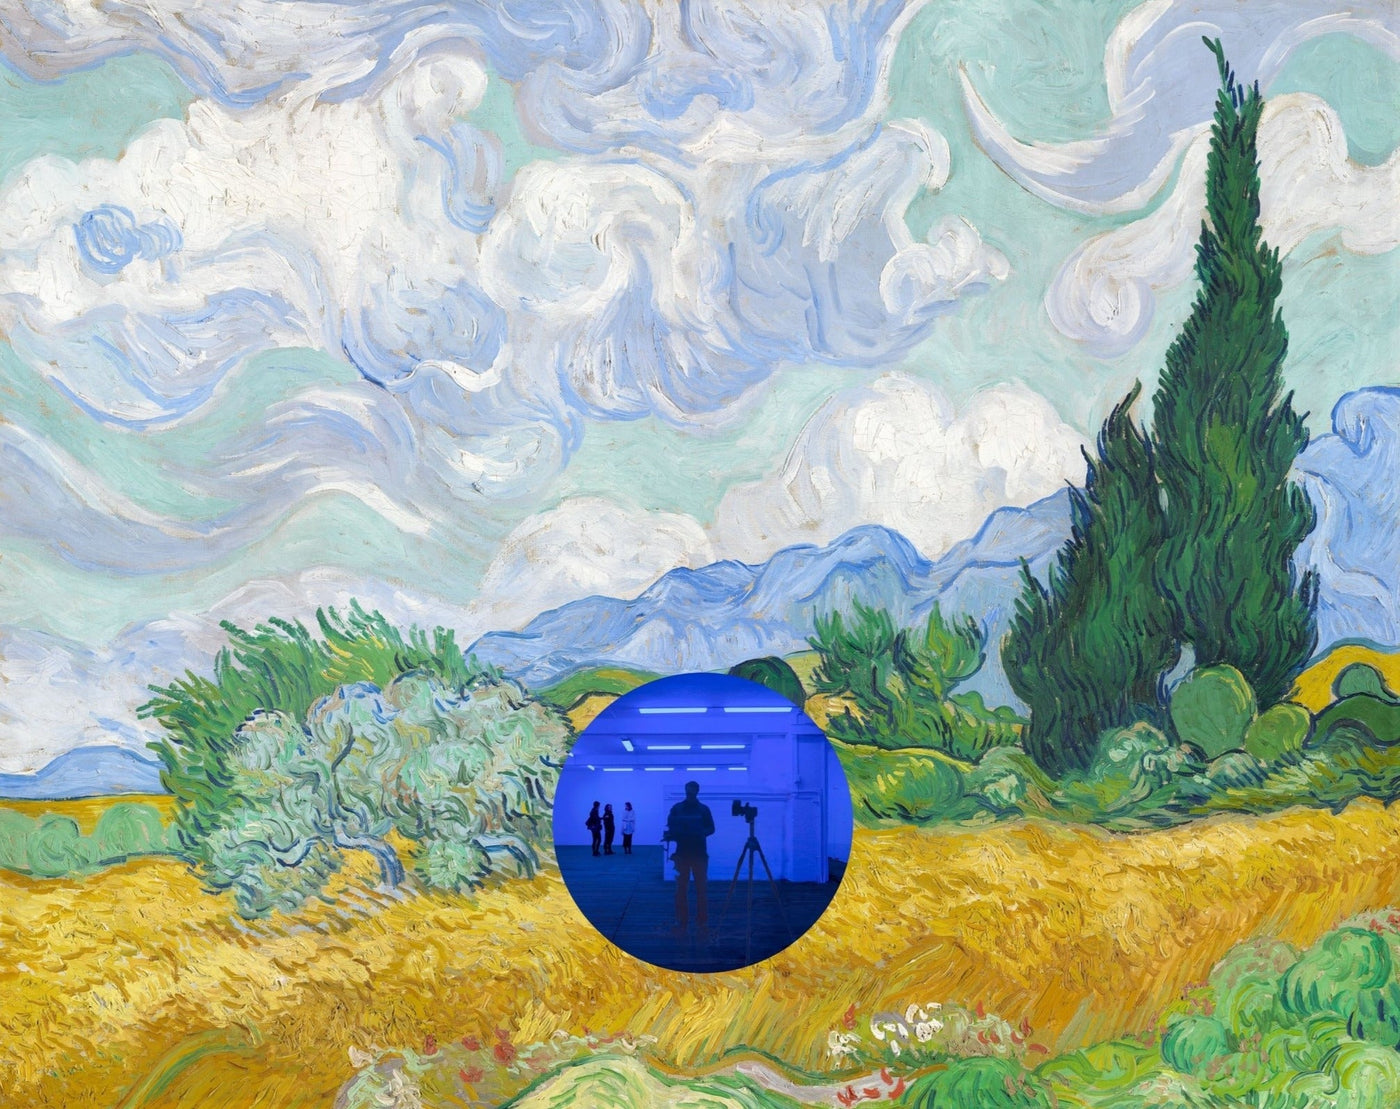 Jeff Koons Gazing Ball (van Gogh Wheatfield with Cypresses) 2017